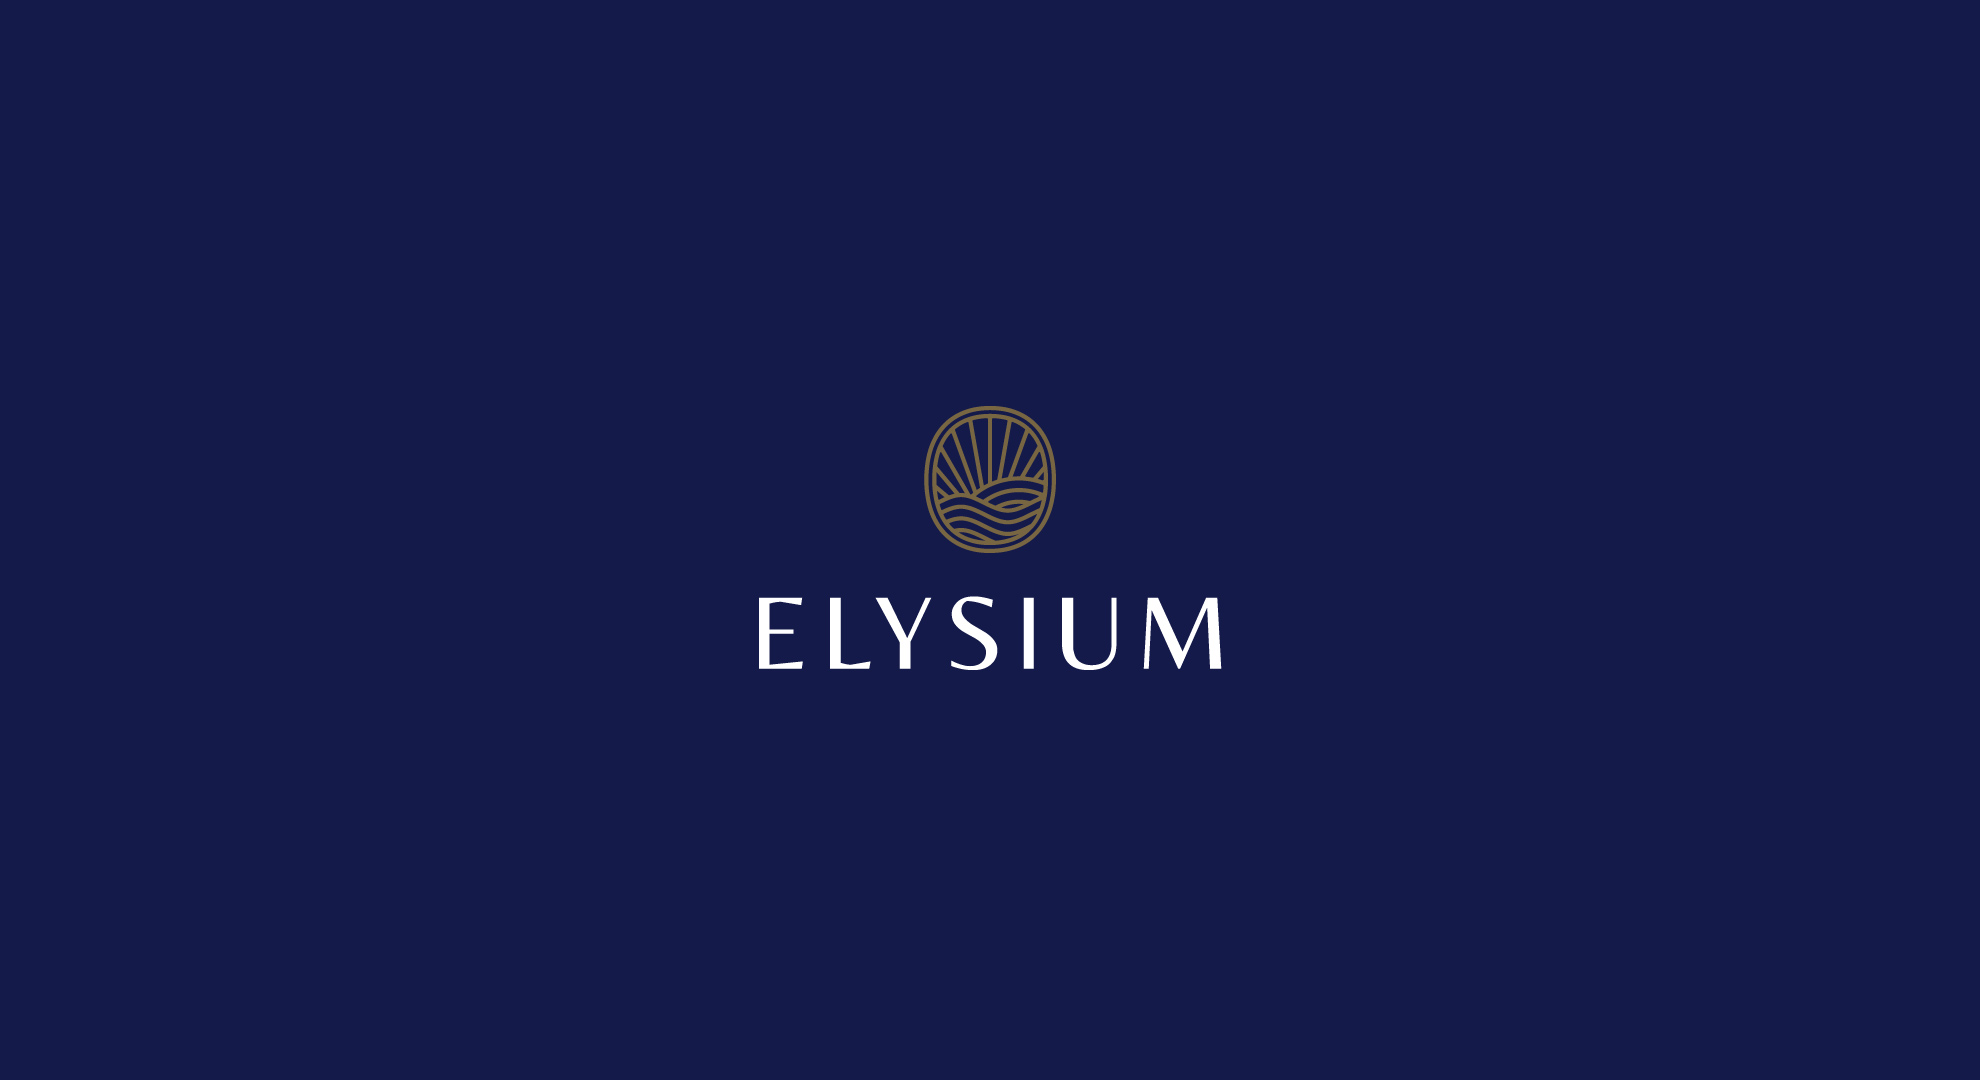 Elysium branding